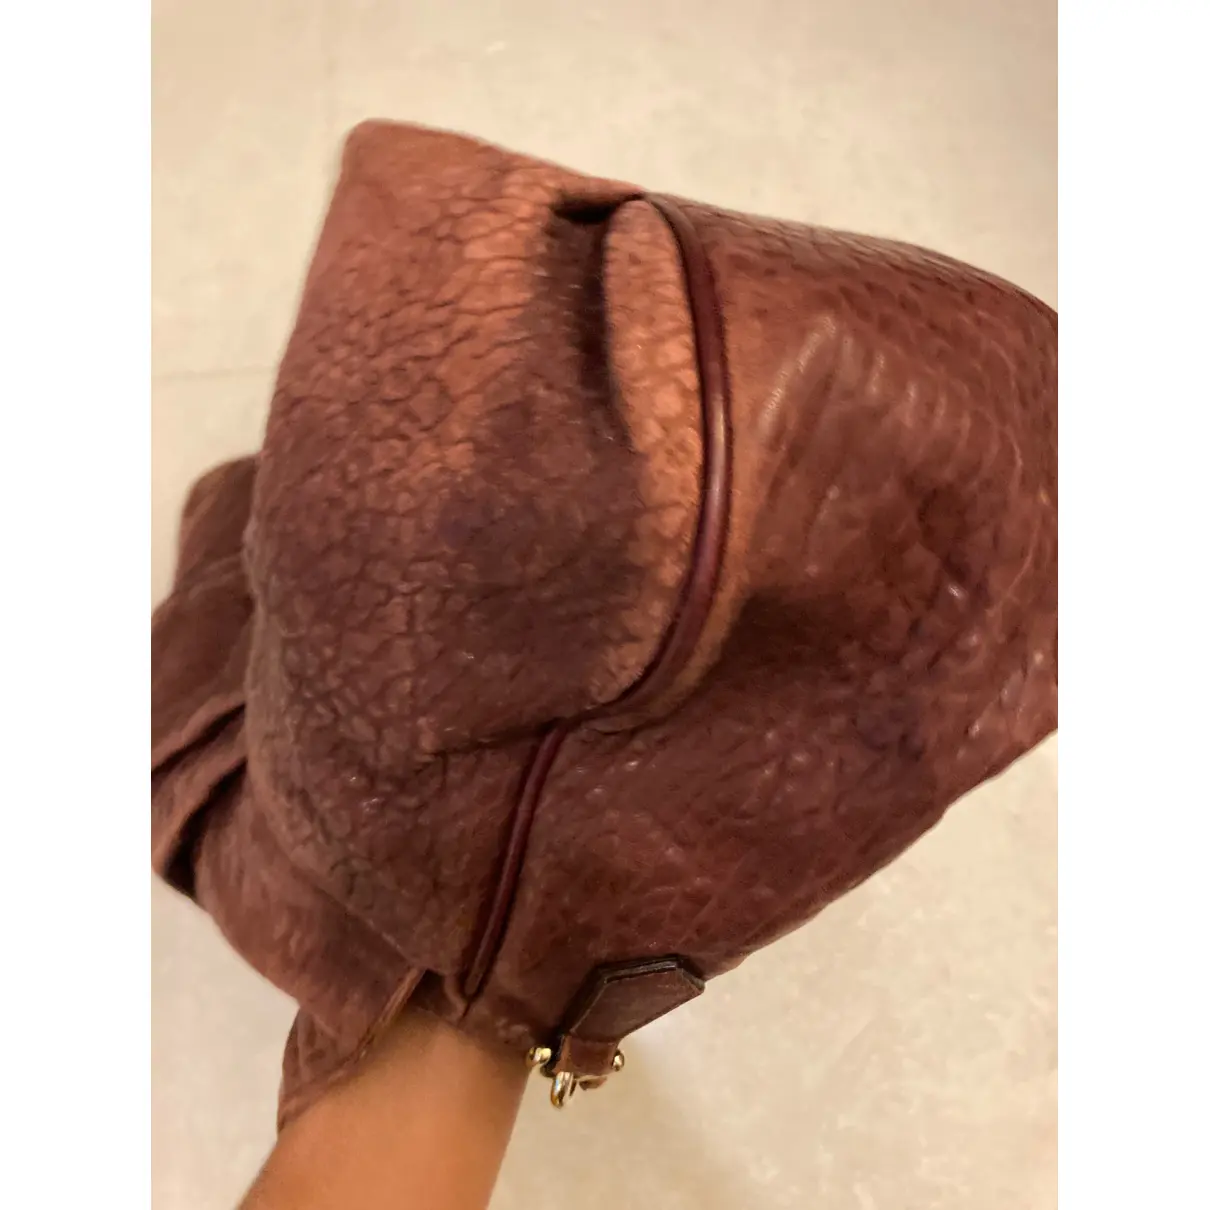 Buy Fendi Leather handbag online